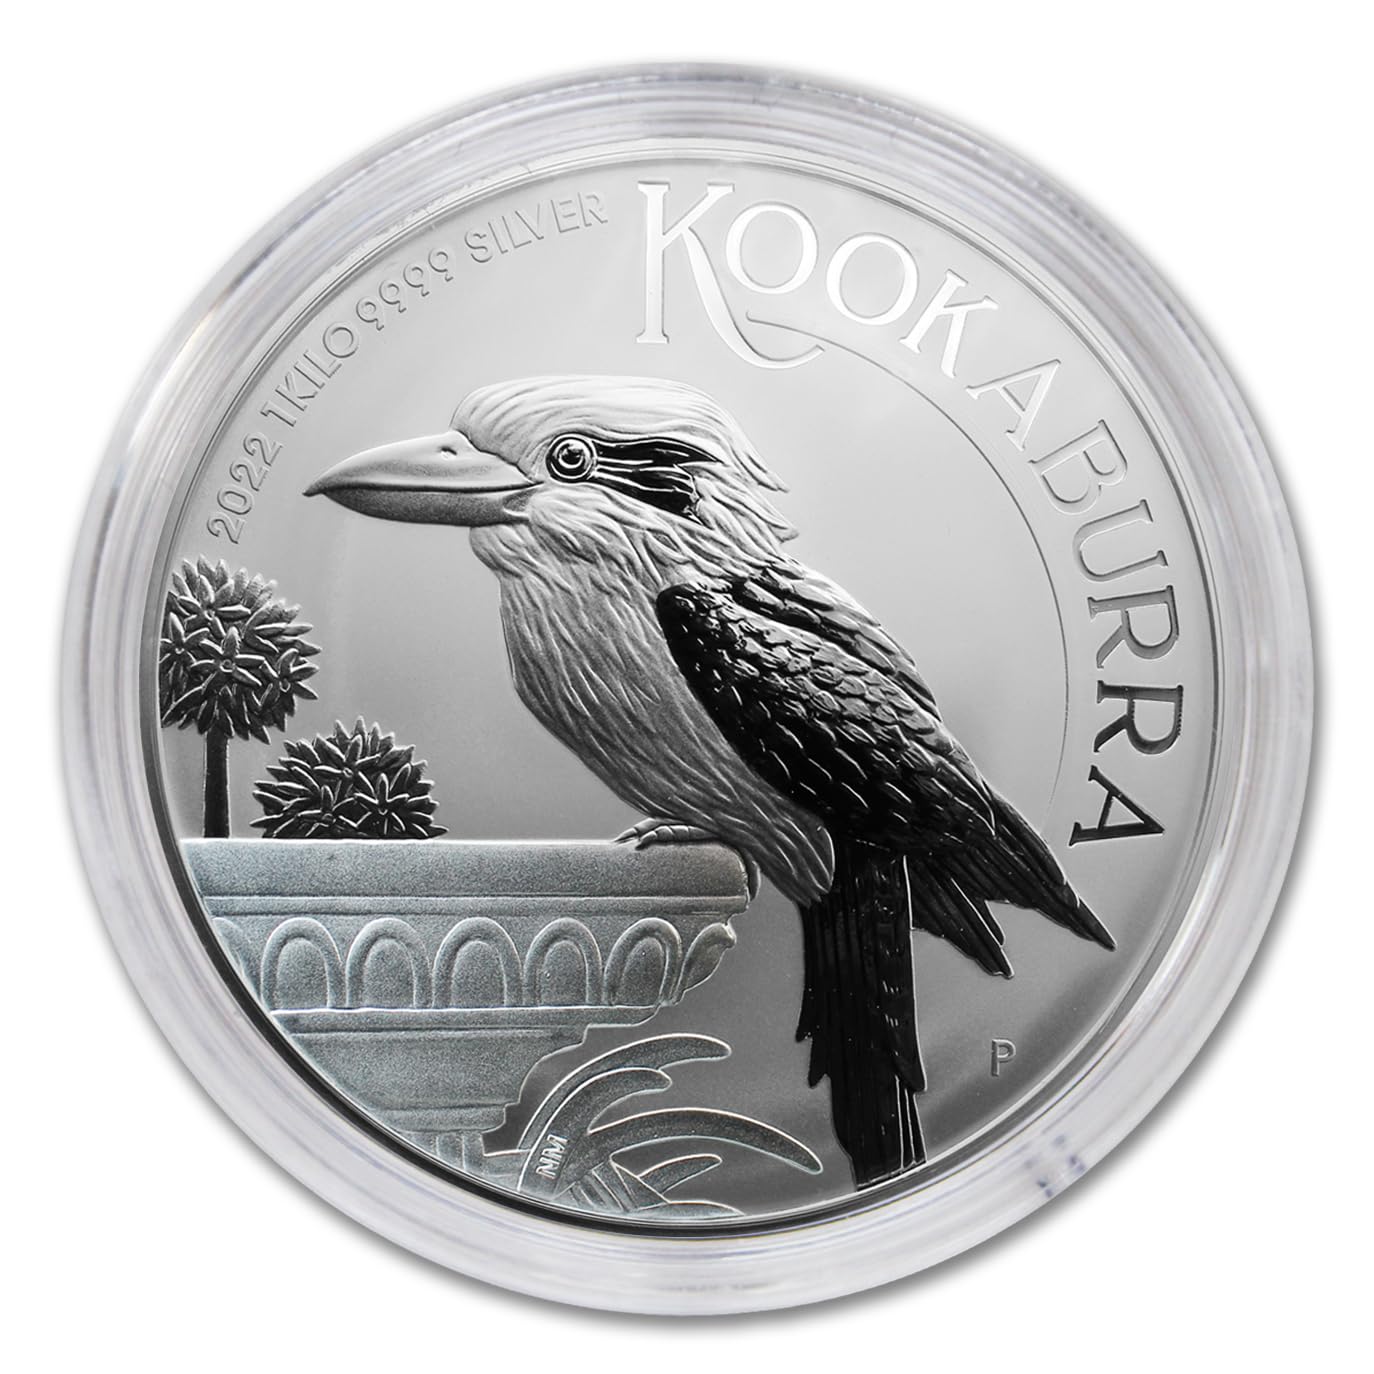 2022 P 1 Kilo (32.15 oz) Australian Silver Kookaburra Paperweight Coin Brilliant Uncirculated (BU - in Capsule) with Certificate of Authenticity $30 Seller BU